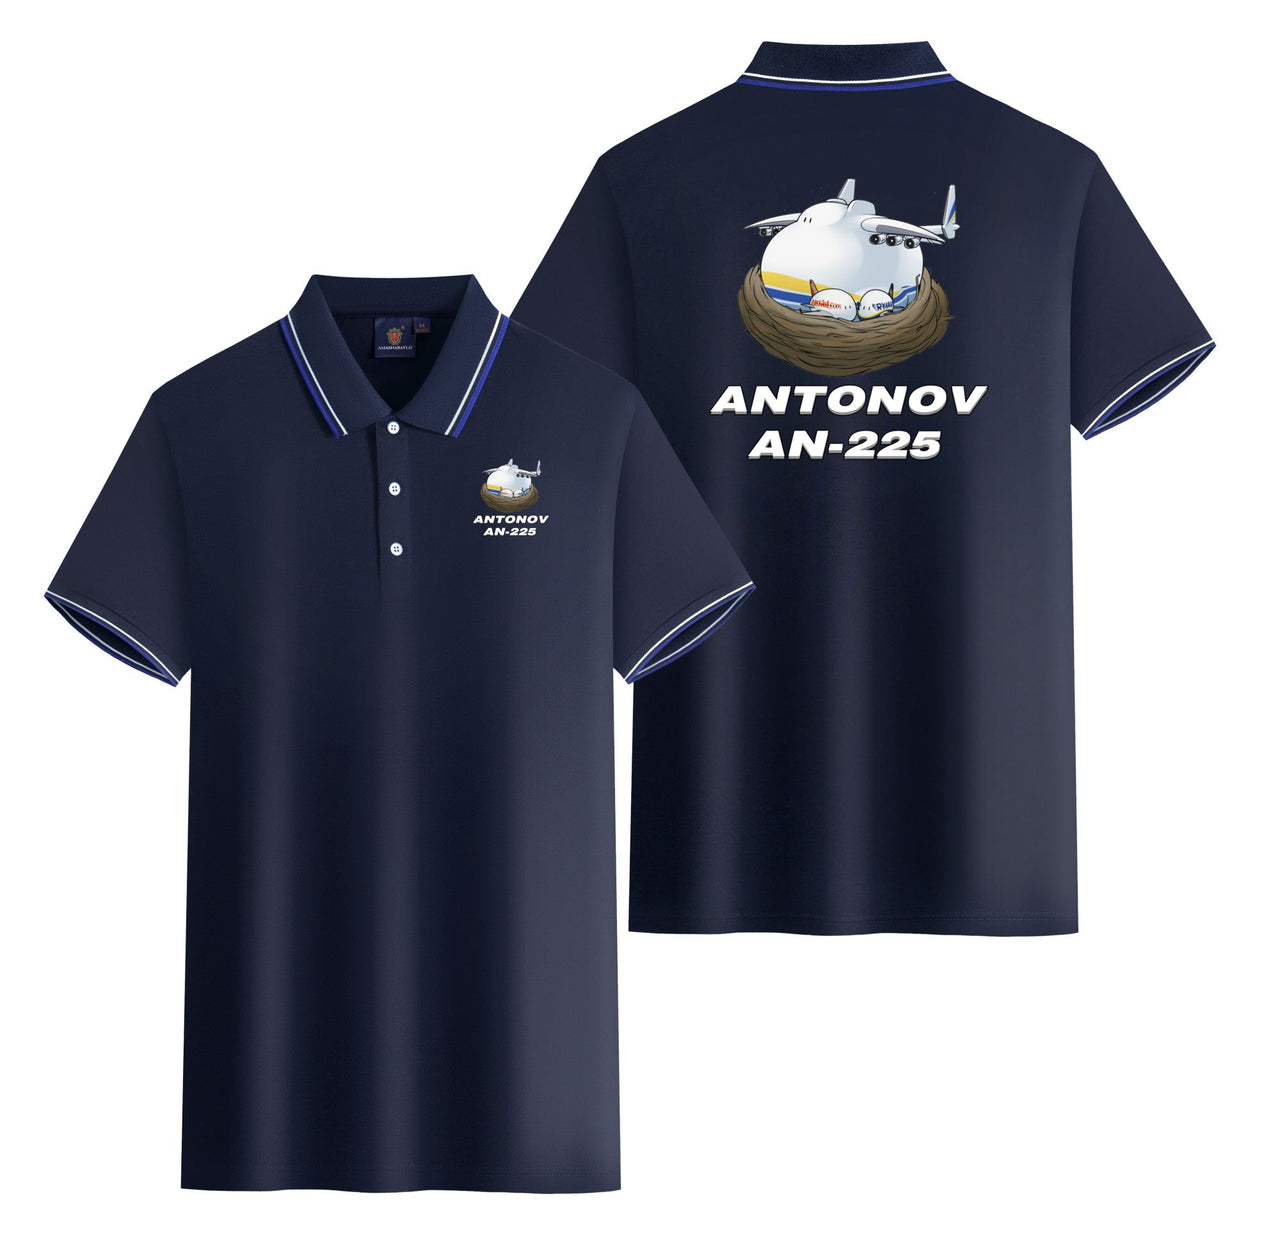 Antonov AN-225 (22) Designed Stylish Polo T-Shirts (Double-Side)